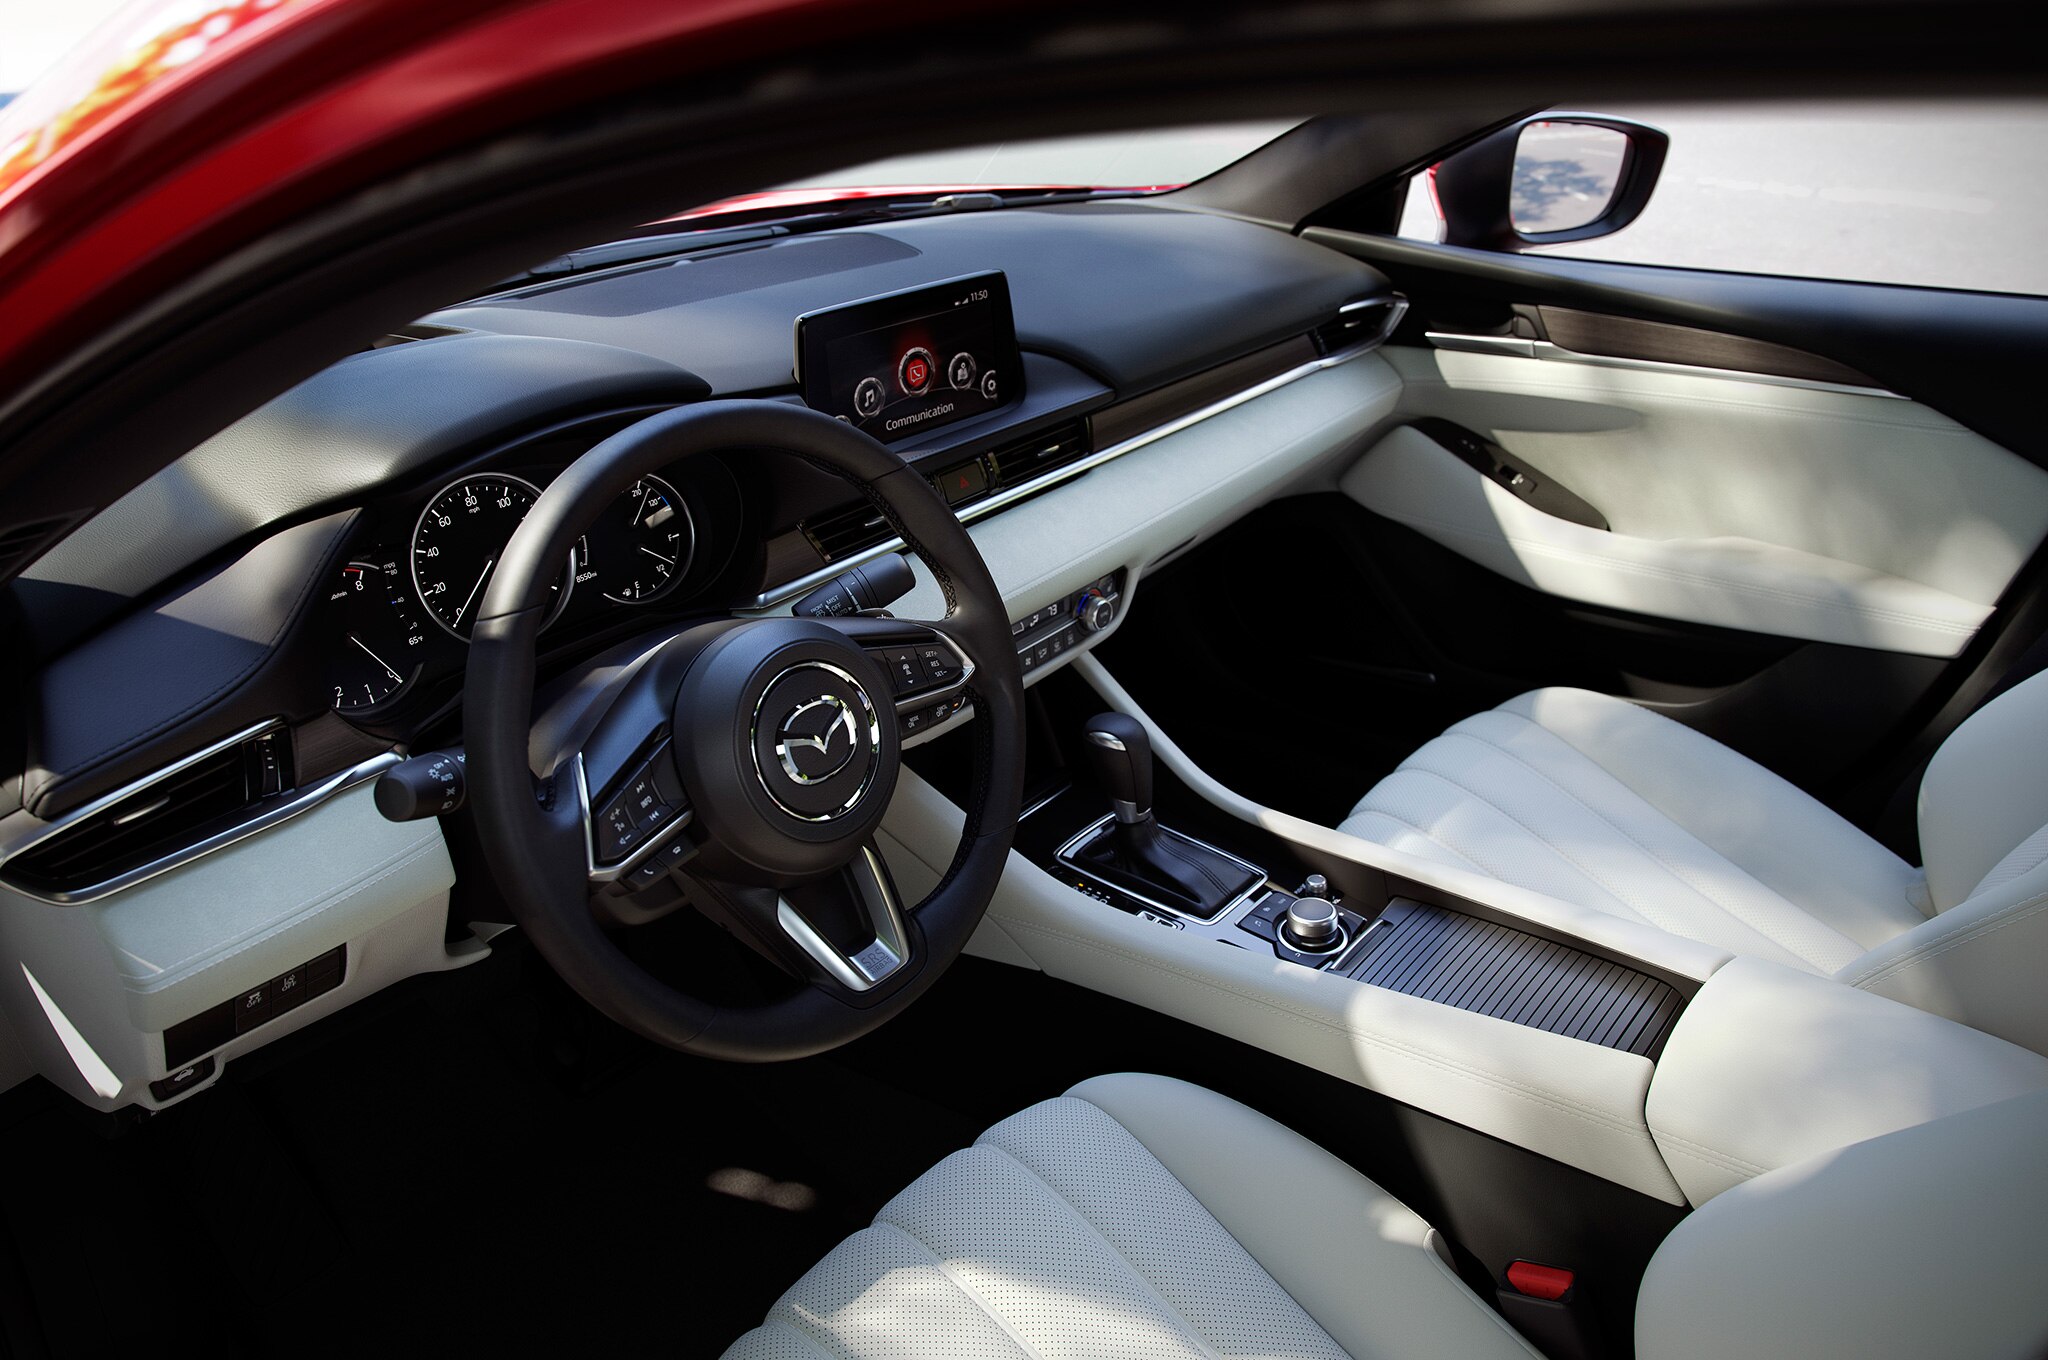 2018-Mazda6-interior-light-color.jpg